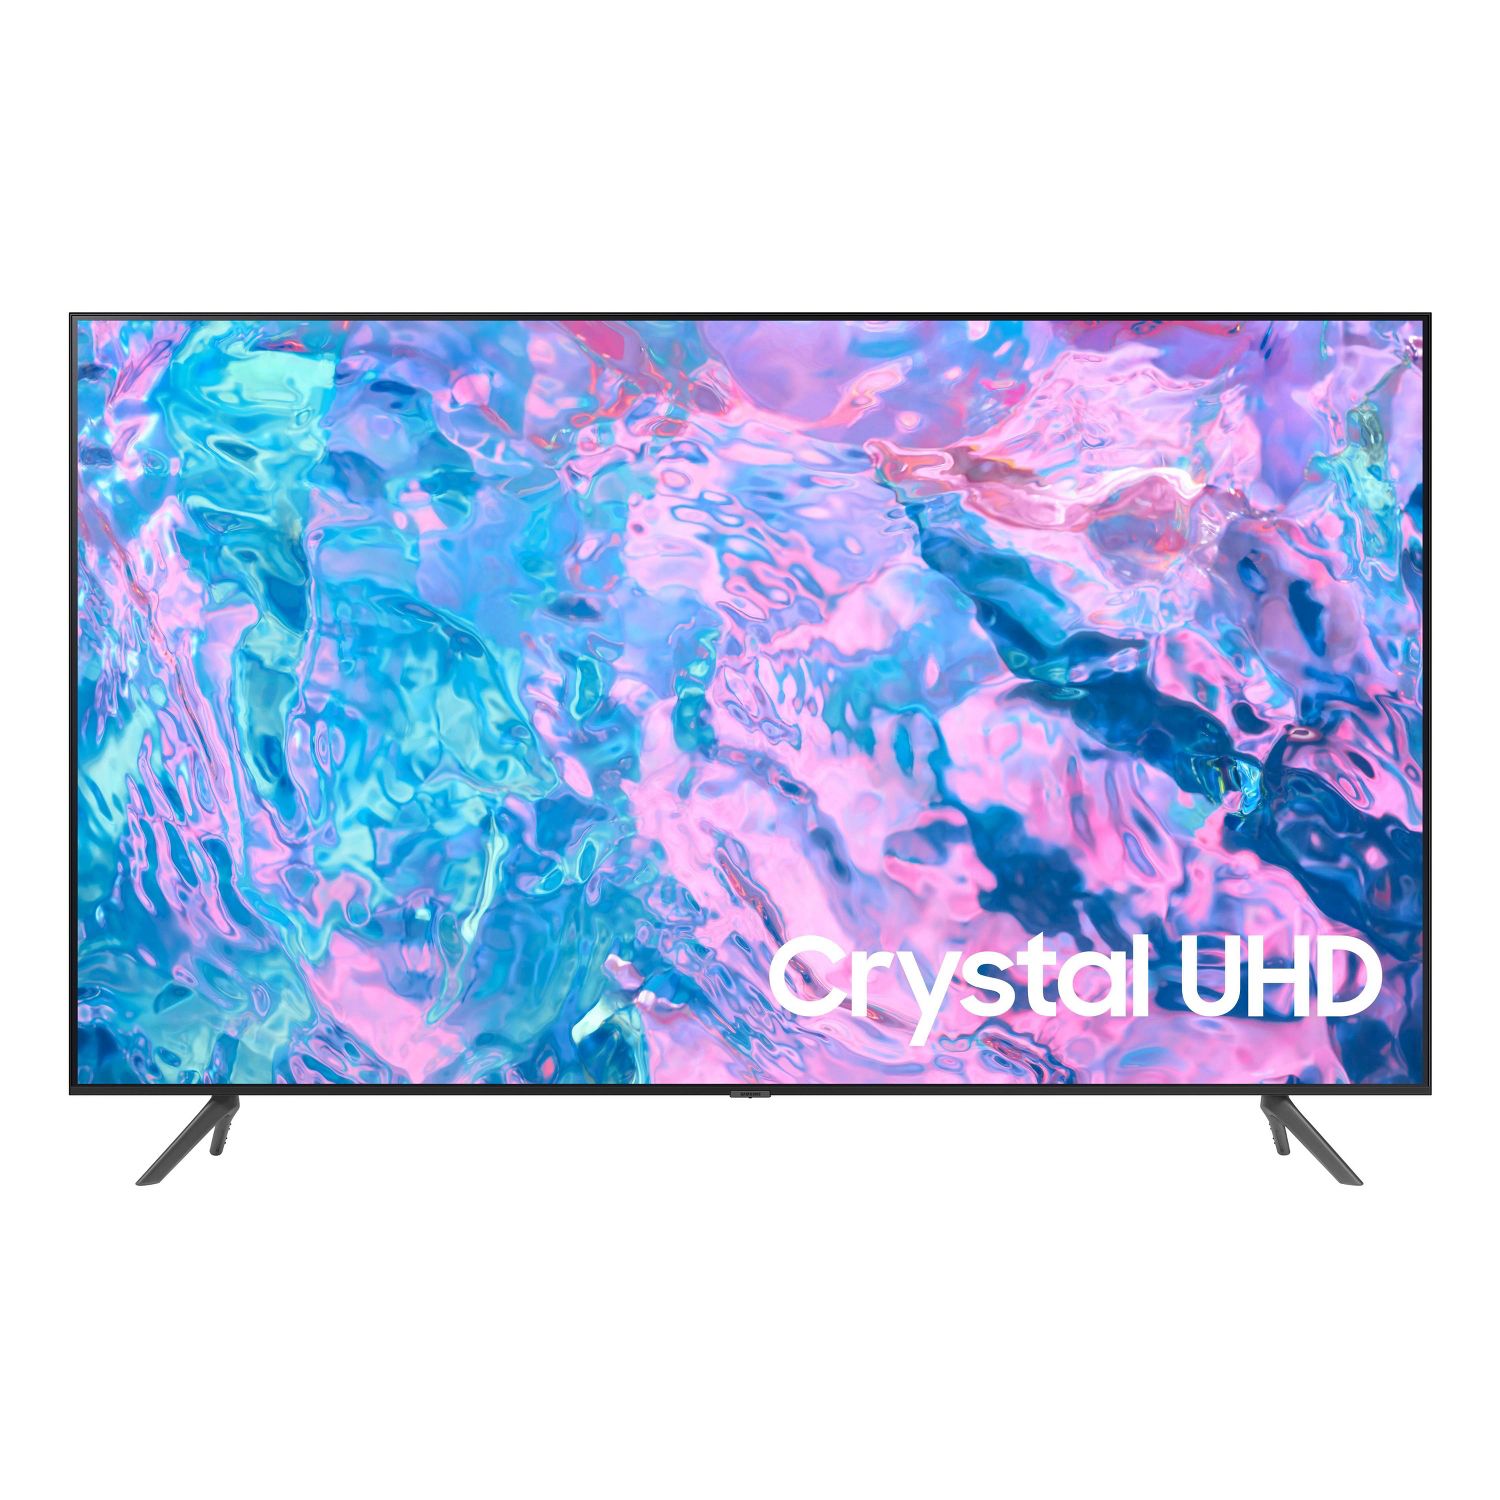 Samsung 75" class CU7000 Crystal UHD 4K Smart TV - Titan Gray (UN75CU7000) - $218